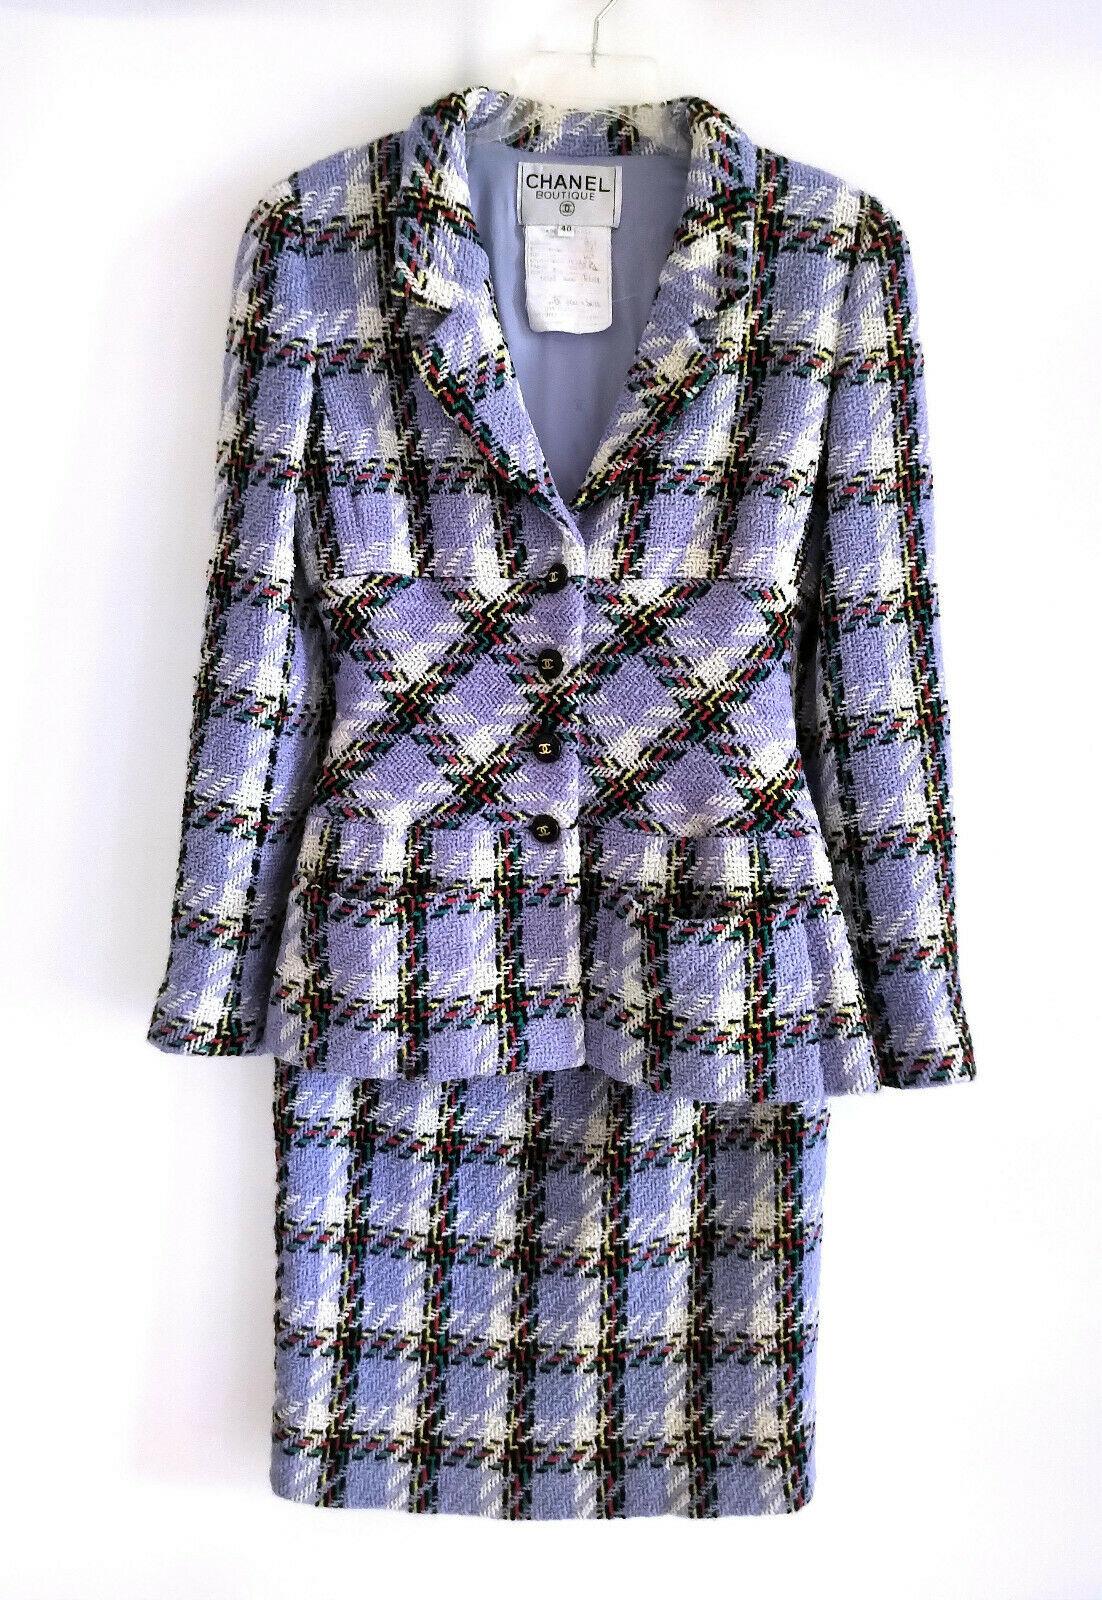 Vintage Chanel 1995 95P bleu lavande fantaisie Tweed veste jupe costume FR 38 US 6 9